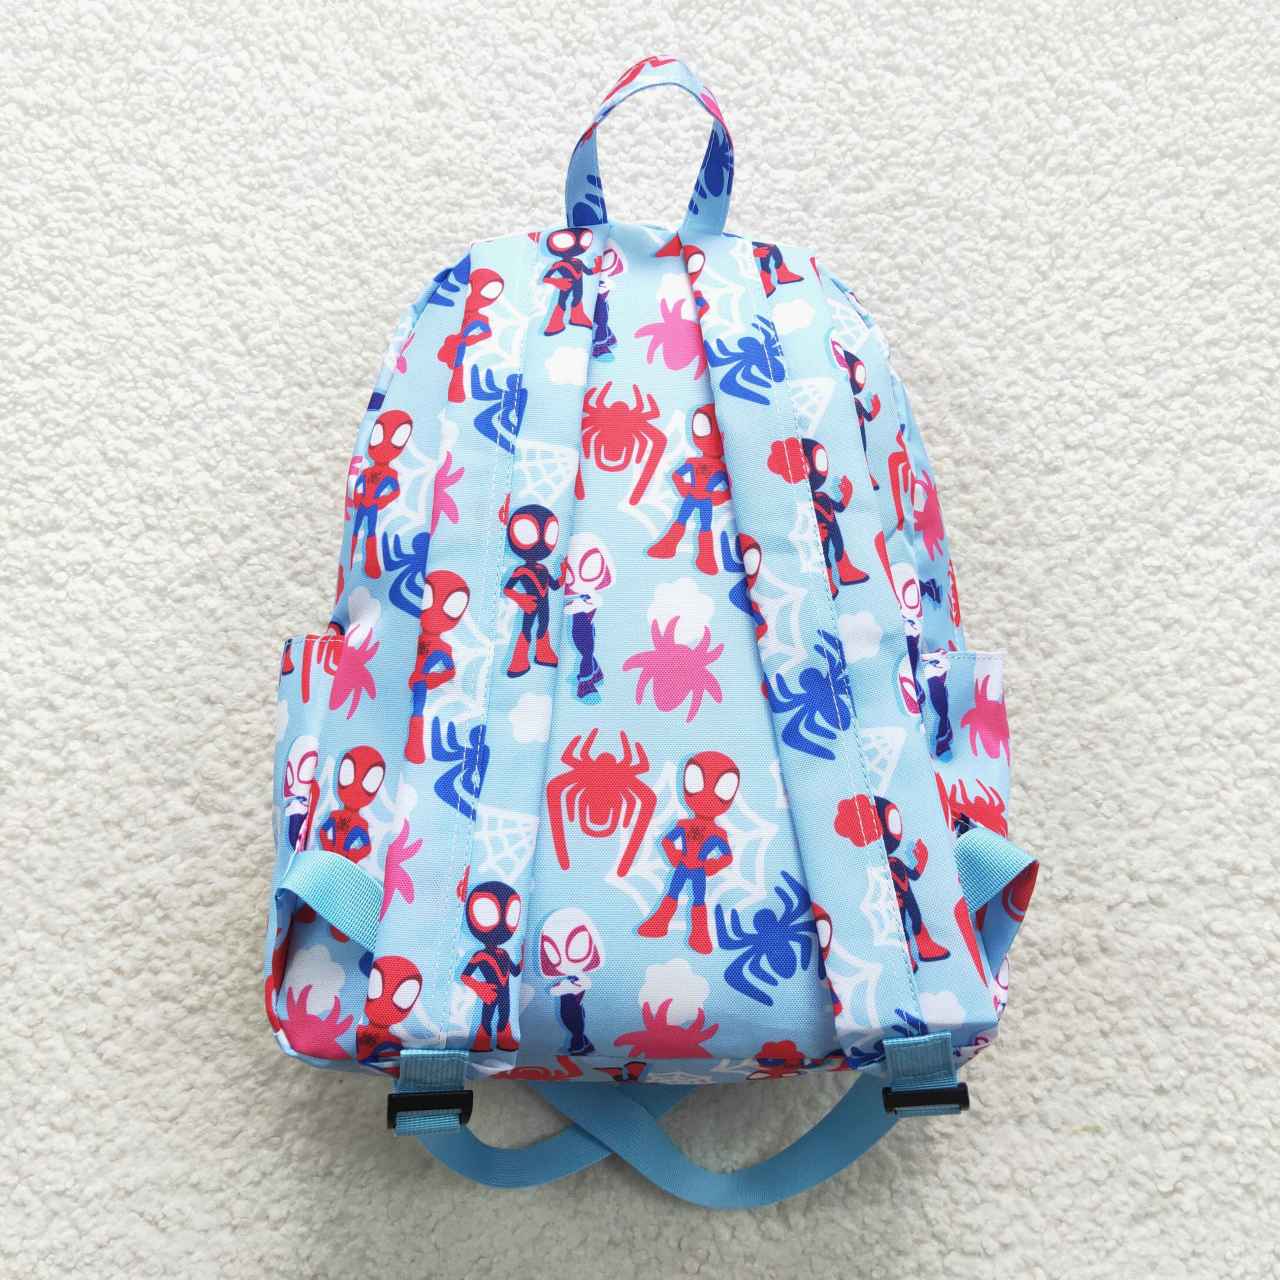 BA0127 Kids bag cartoon spider print light blue backpack